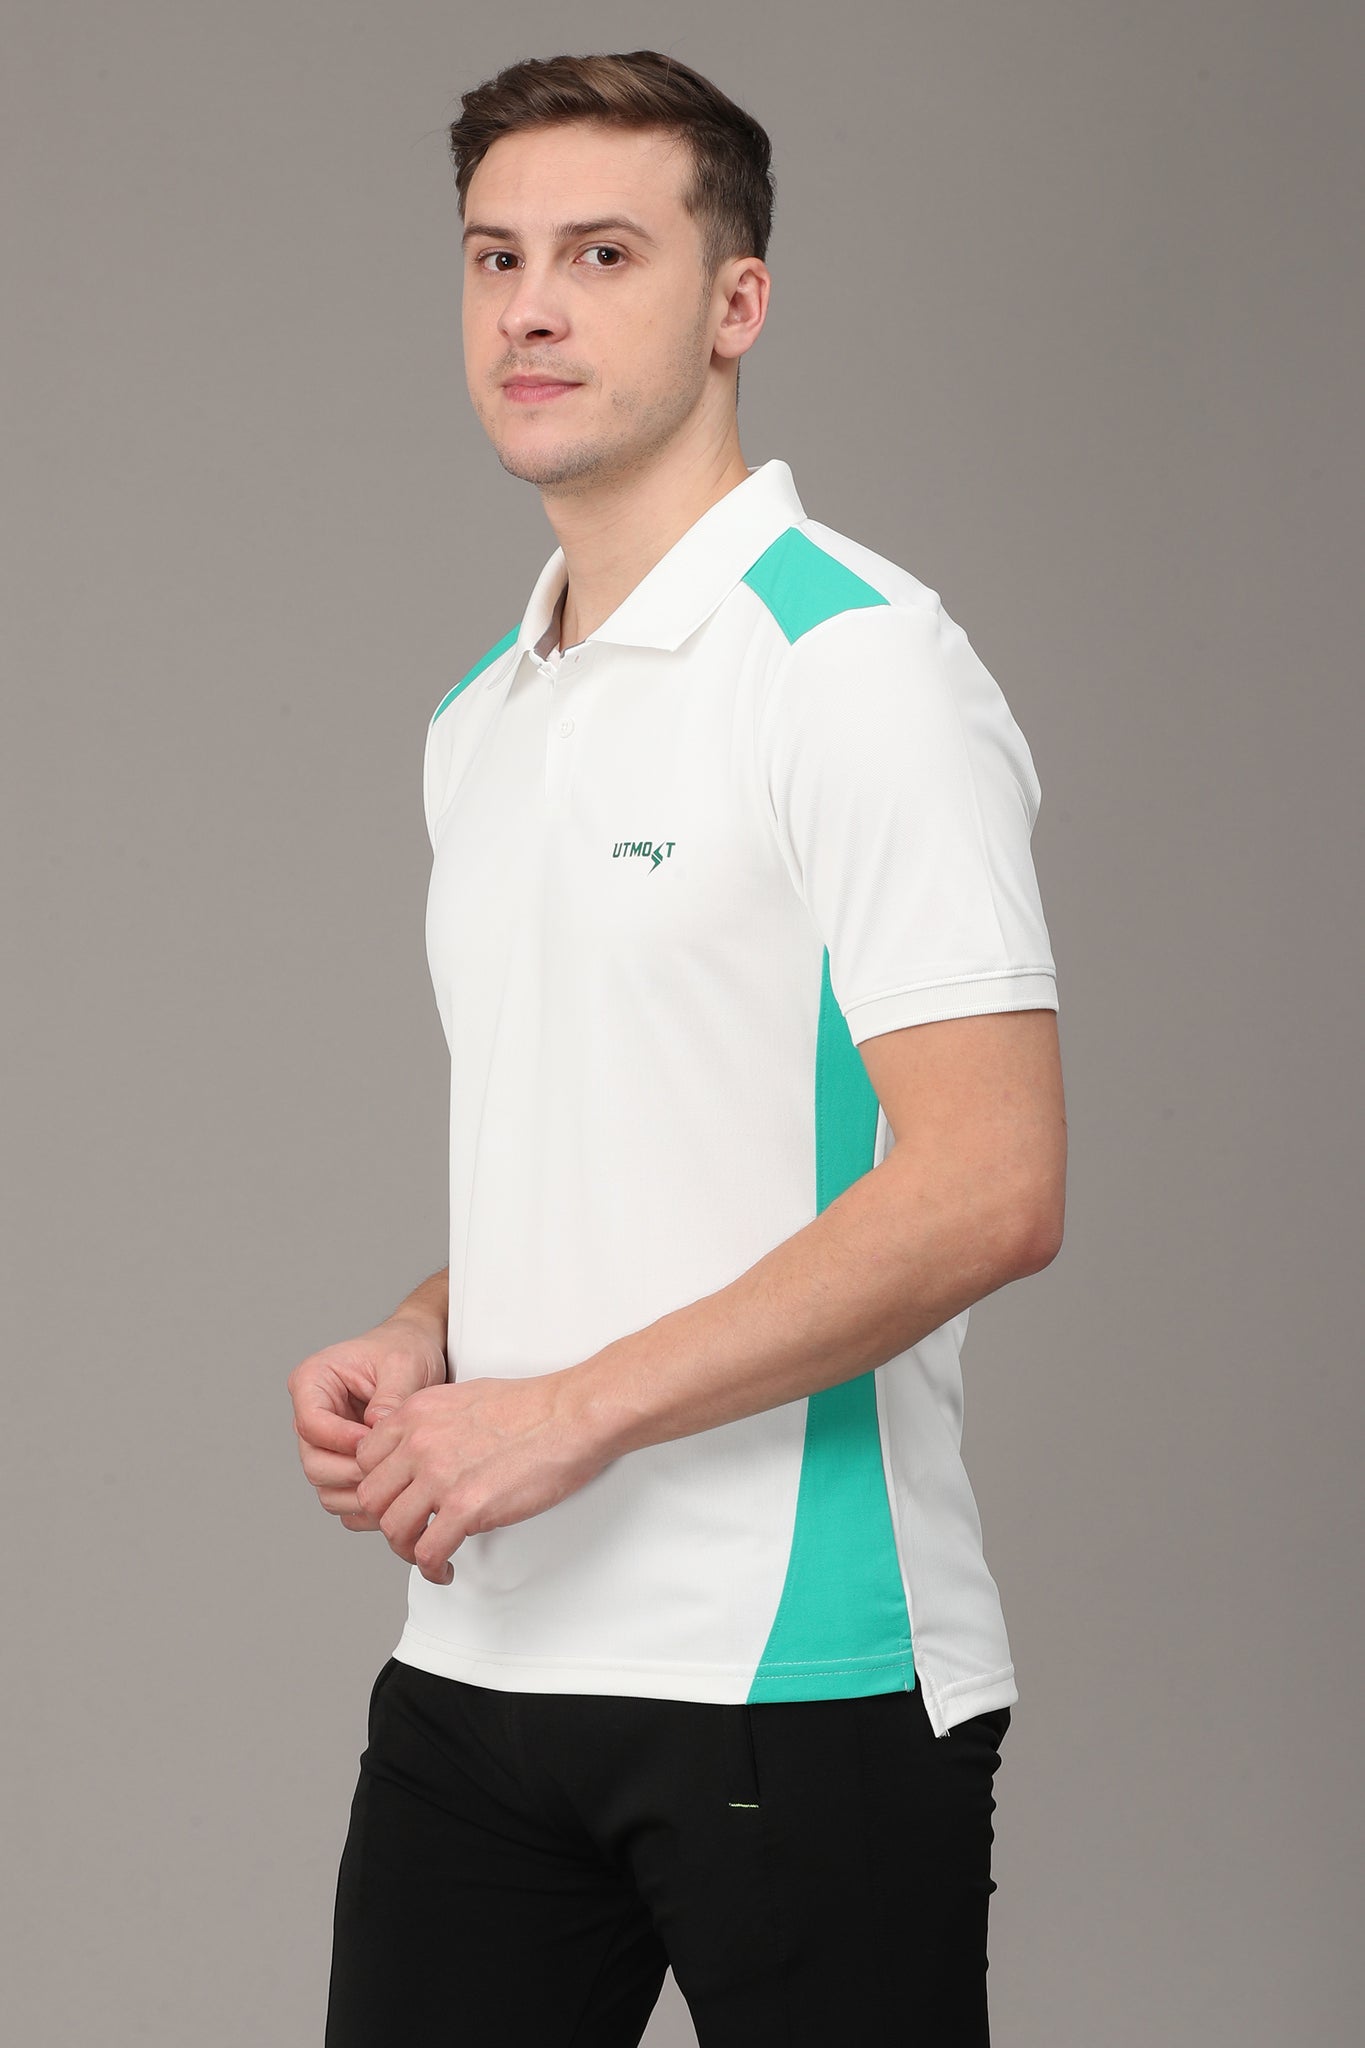 Green Strip on White Polo T-Shirt